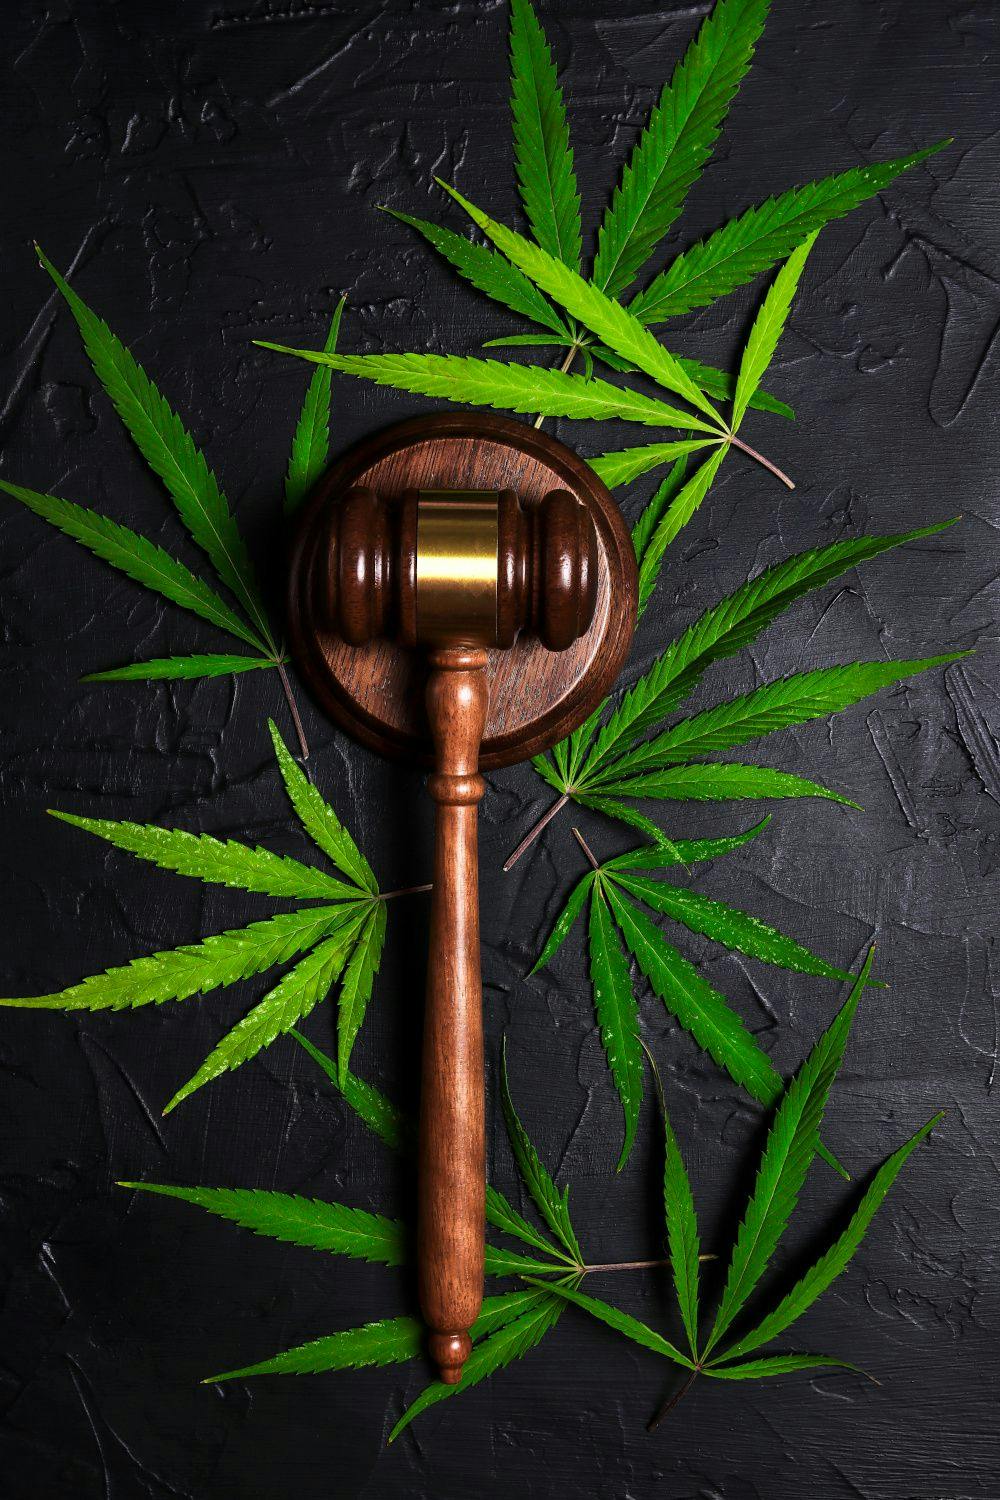 Are regulations for hemp-derived cannabinoids nearing?